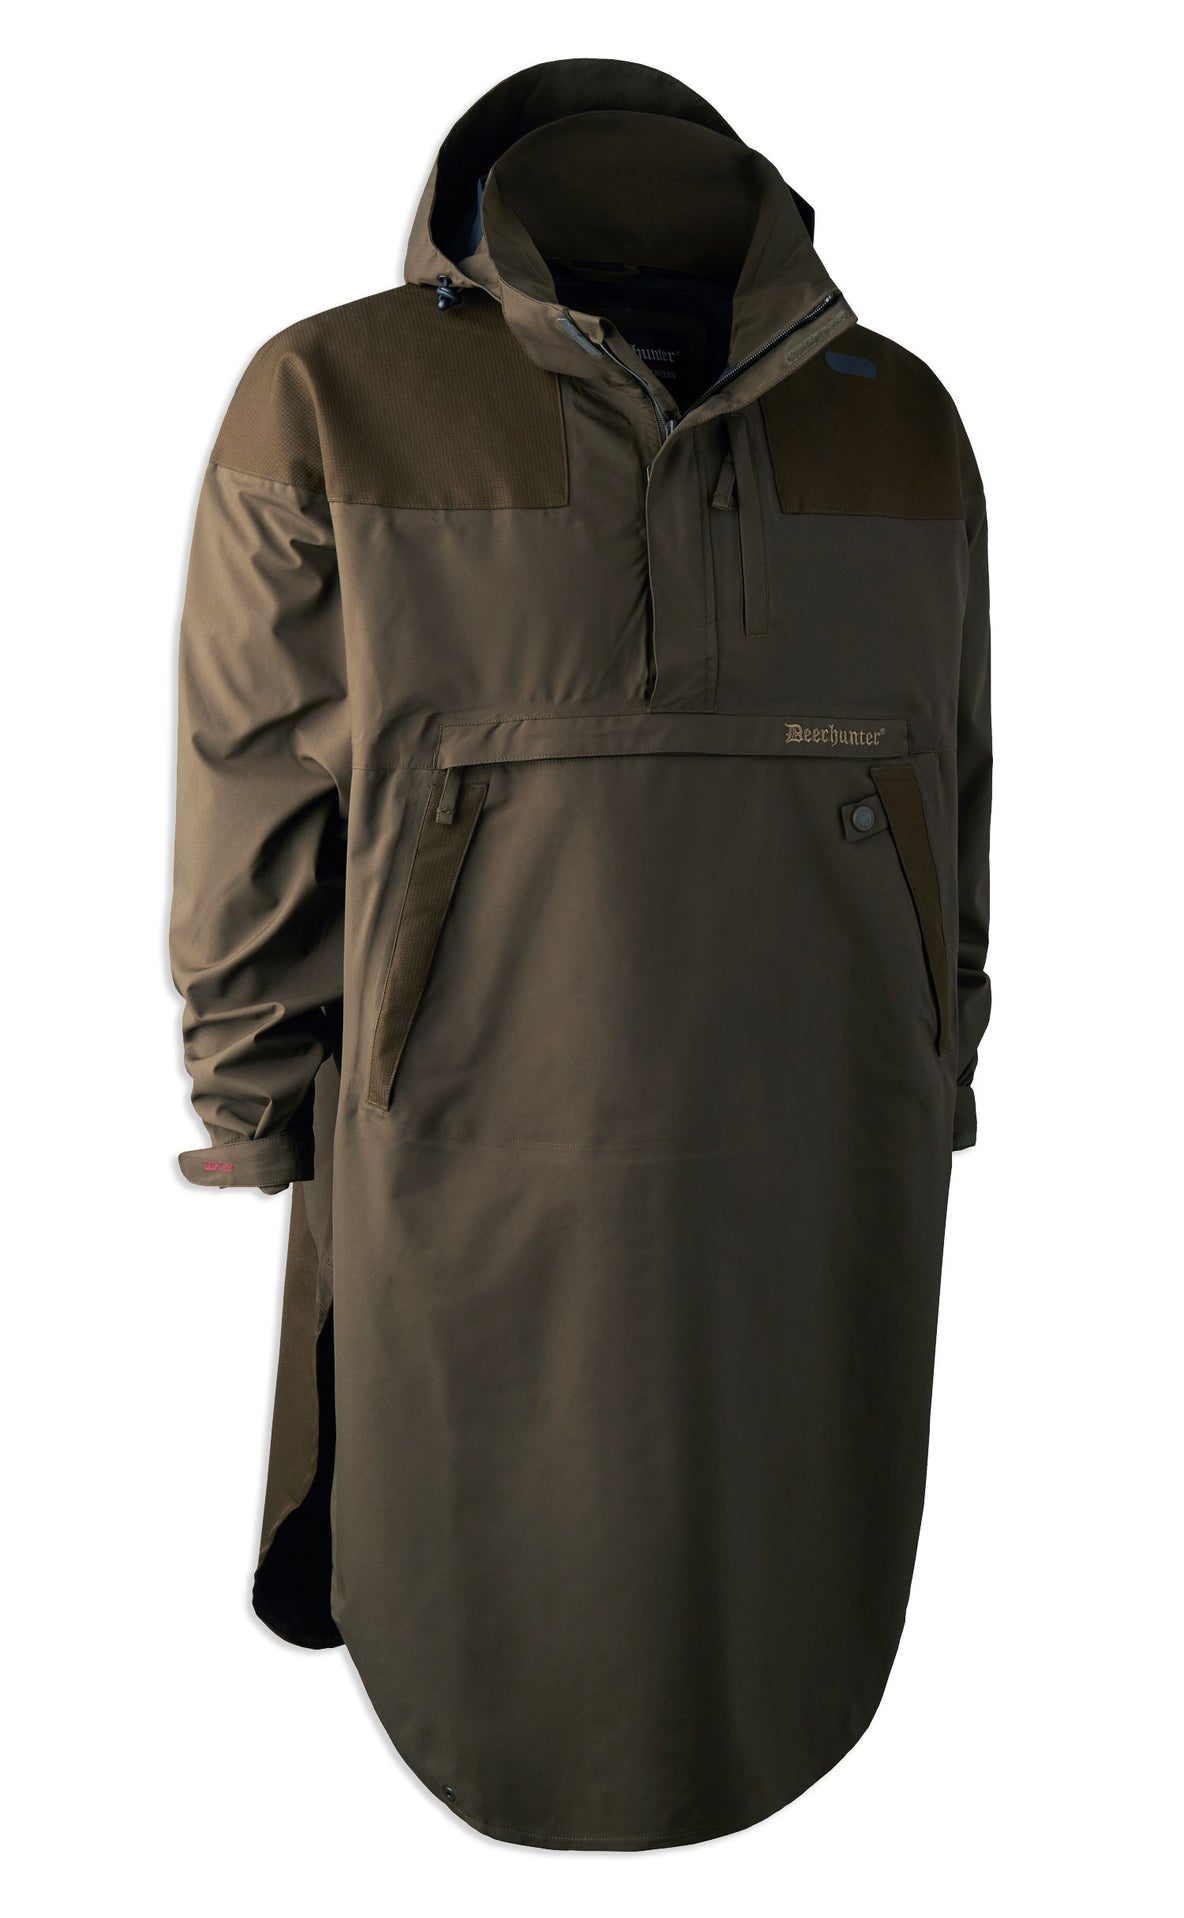 Adults Men Raincoat Waterproof Hooded Rain Jacket Long Coat Outdoor Work  Wet